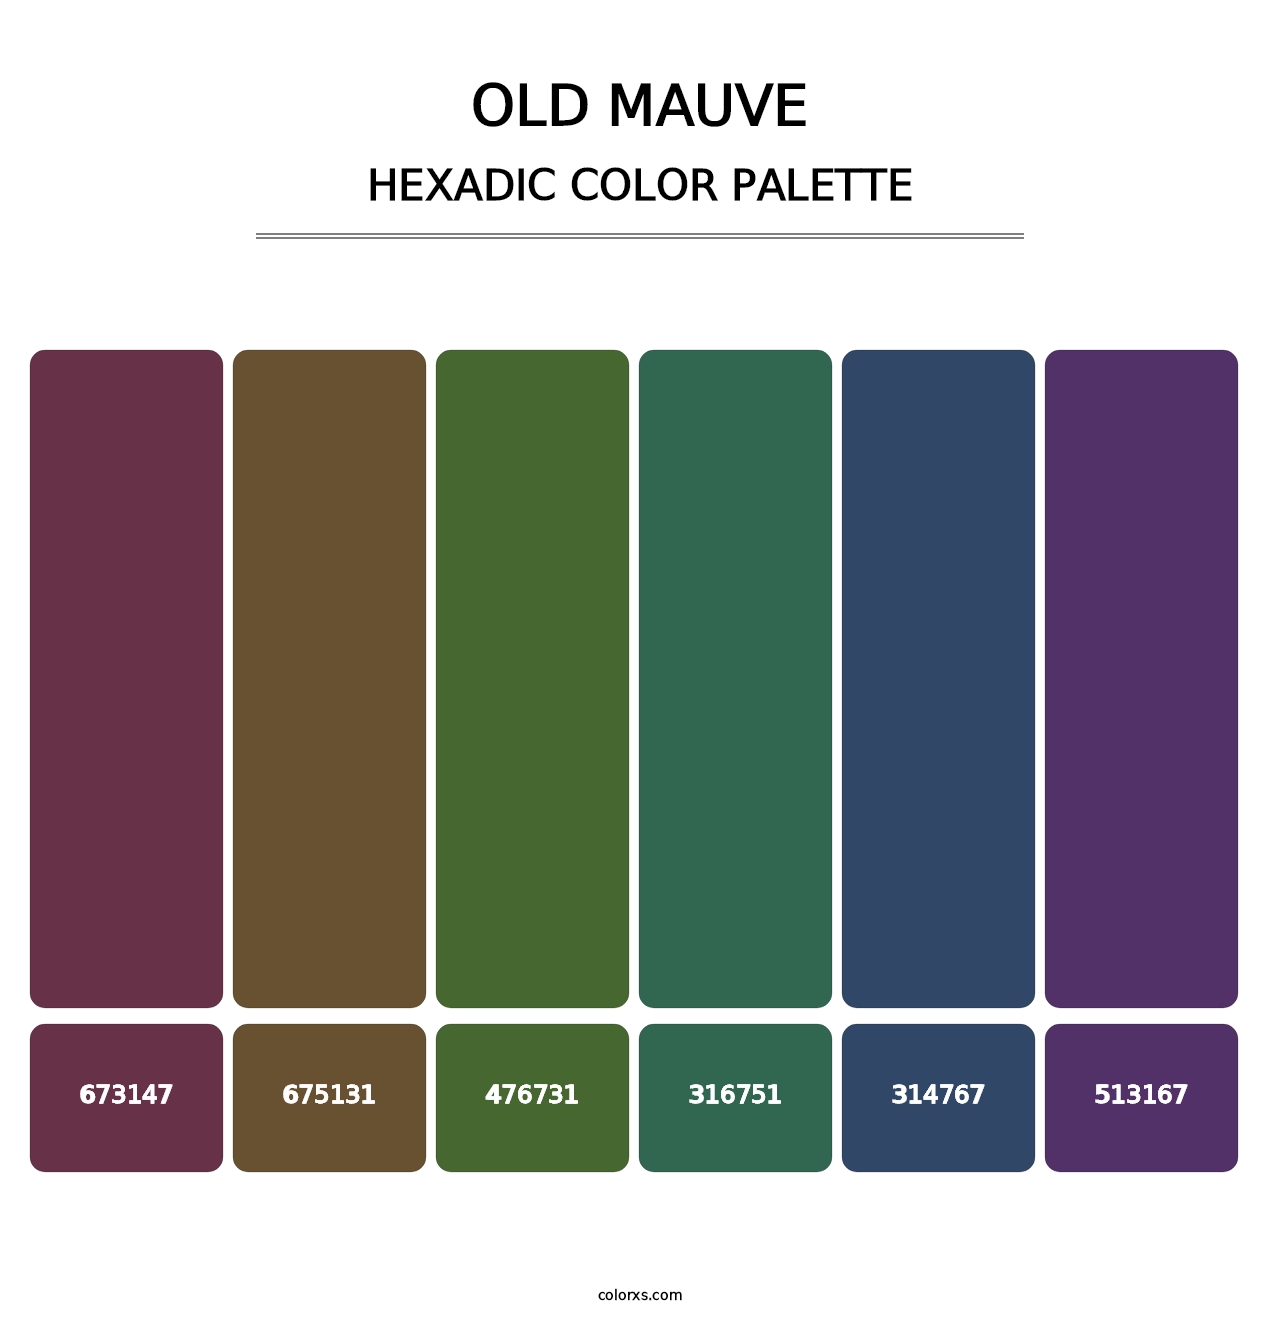 Old Mauve - Hexadic Color Palette